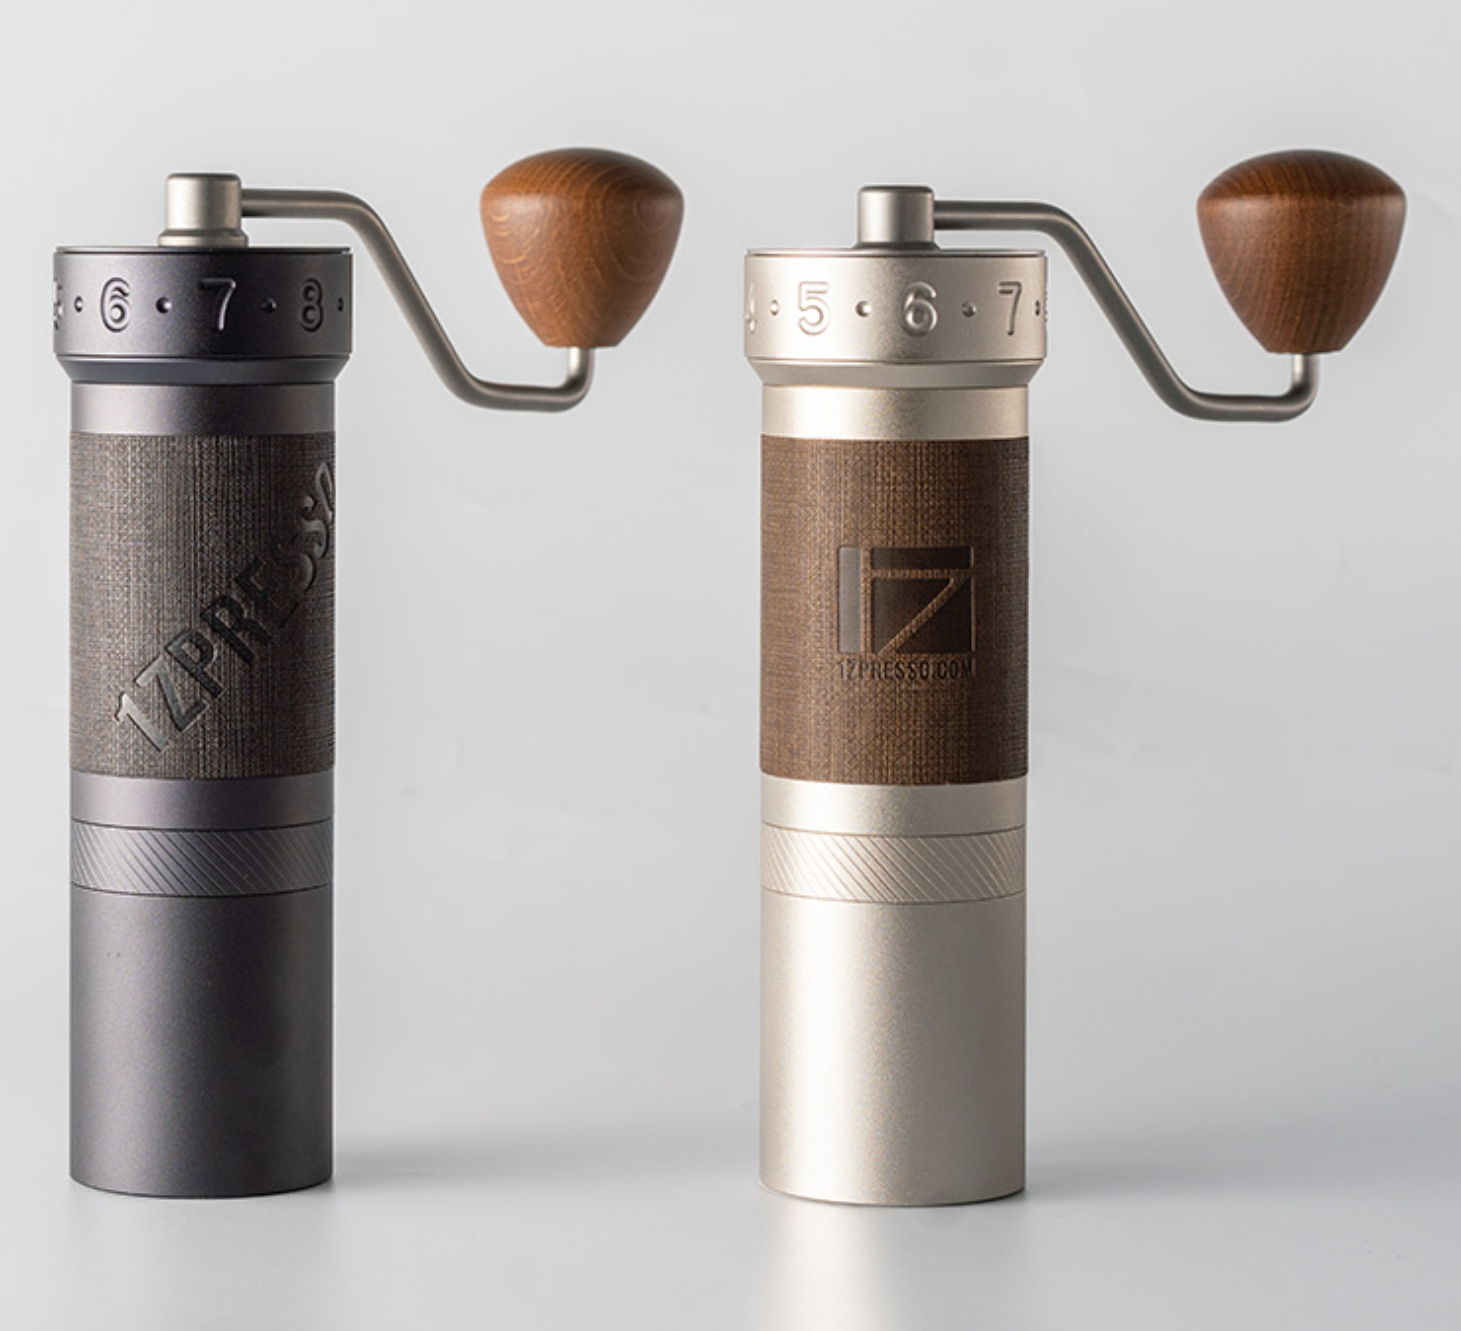 1Zpresso Carrying Case – 1Zpresso